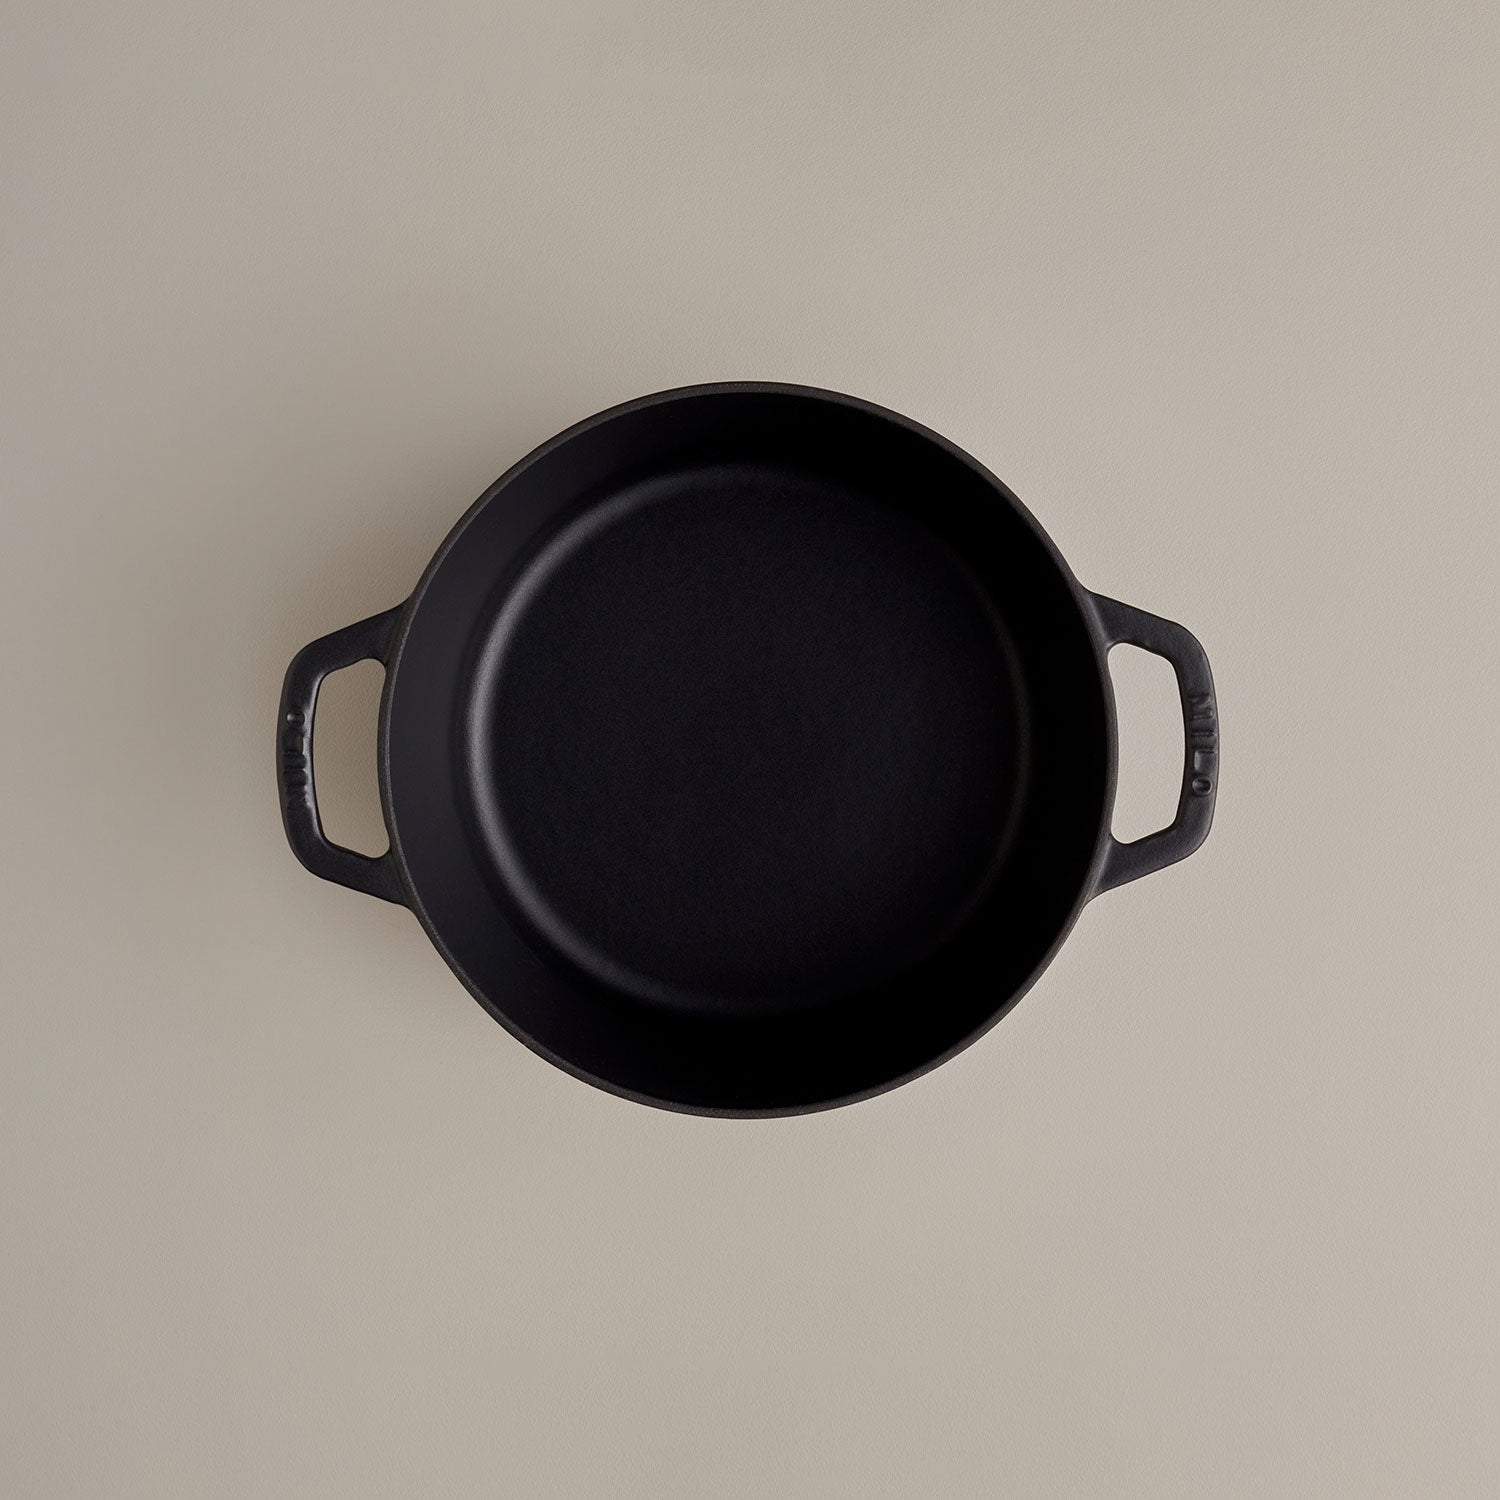 Milo by Kana 3.5-Quart Enameled Dutch Oven — Glossy Black